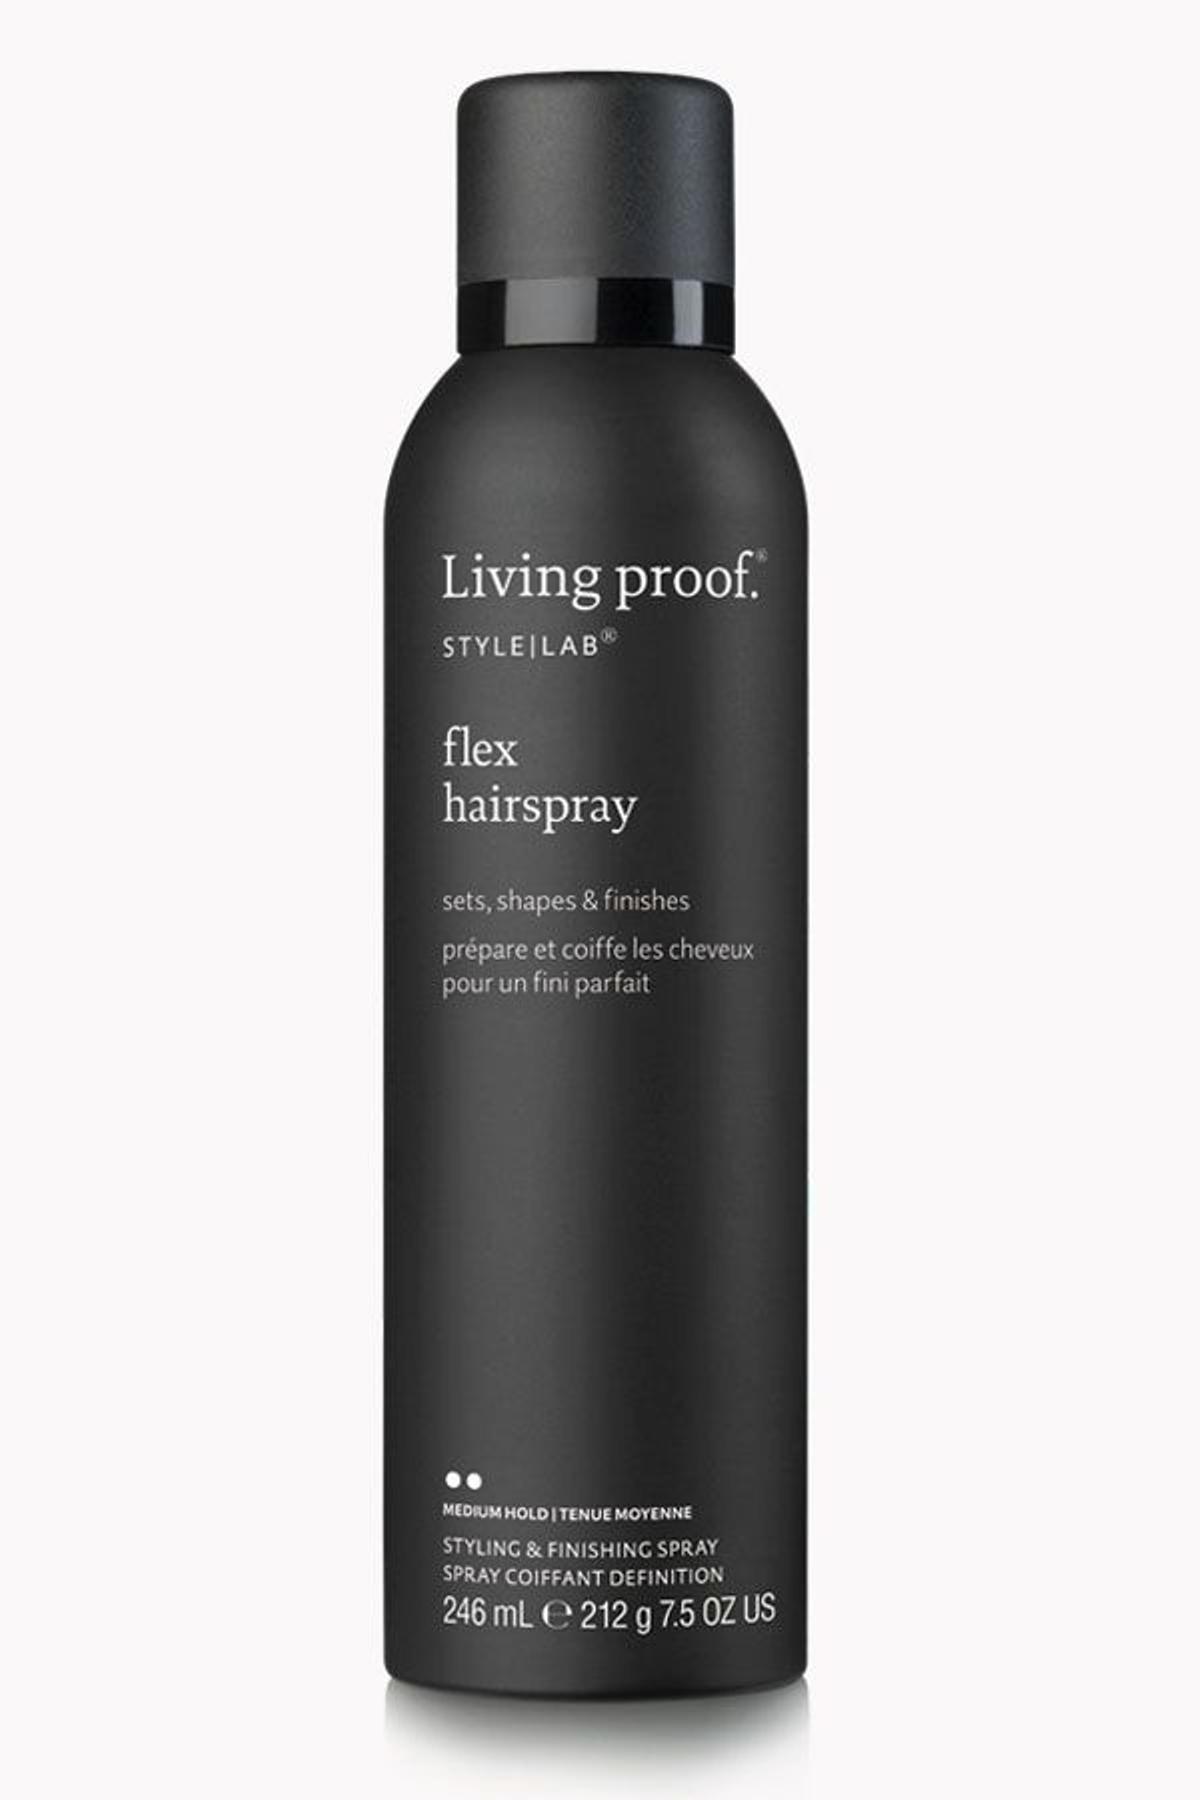 Flex Hairspray de Living proof